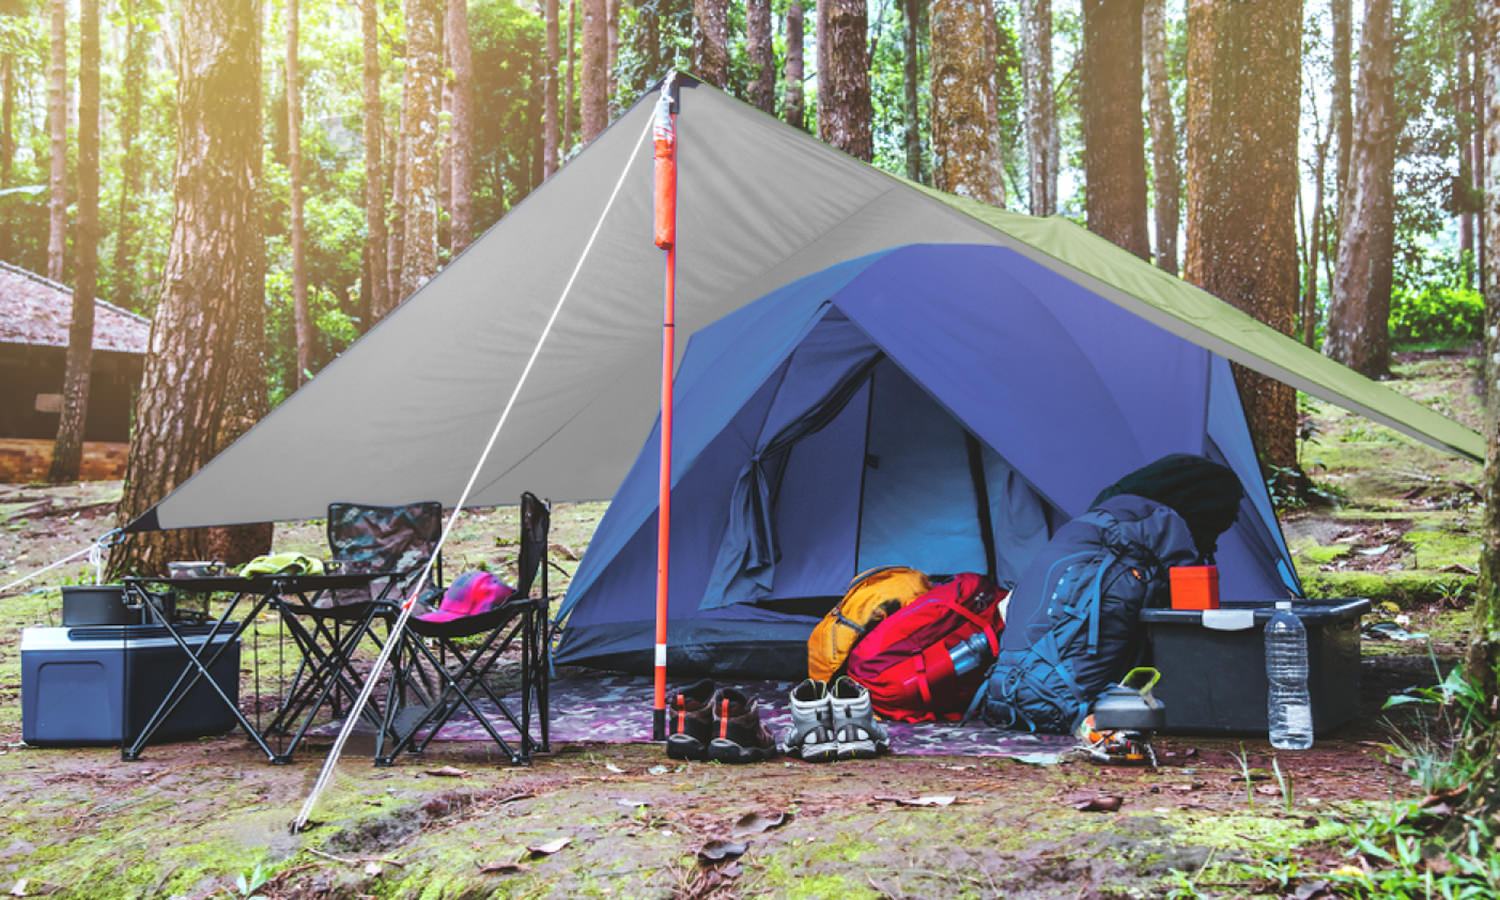 Unigear Rainproof Camping Tarp Shelter